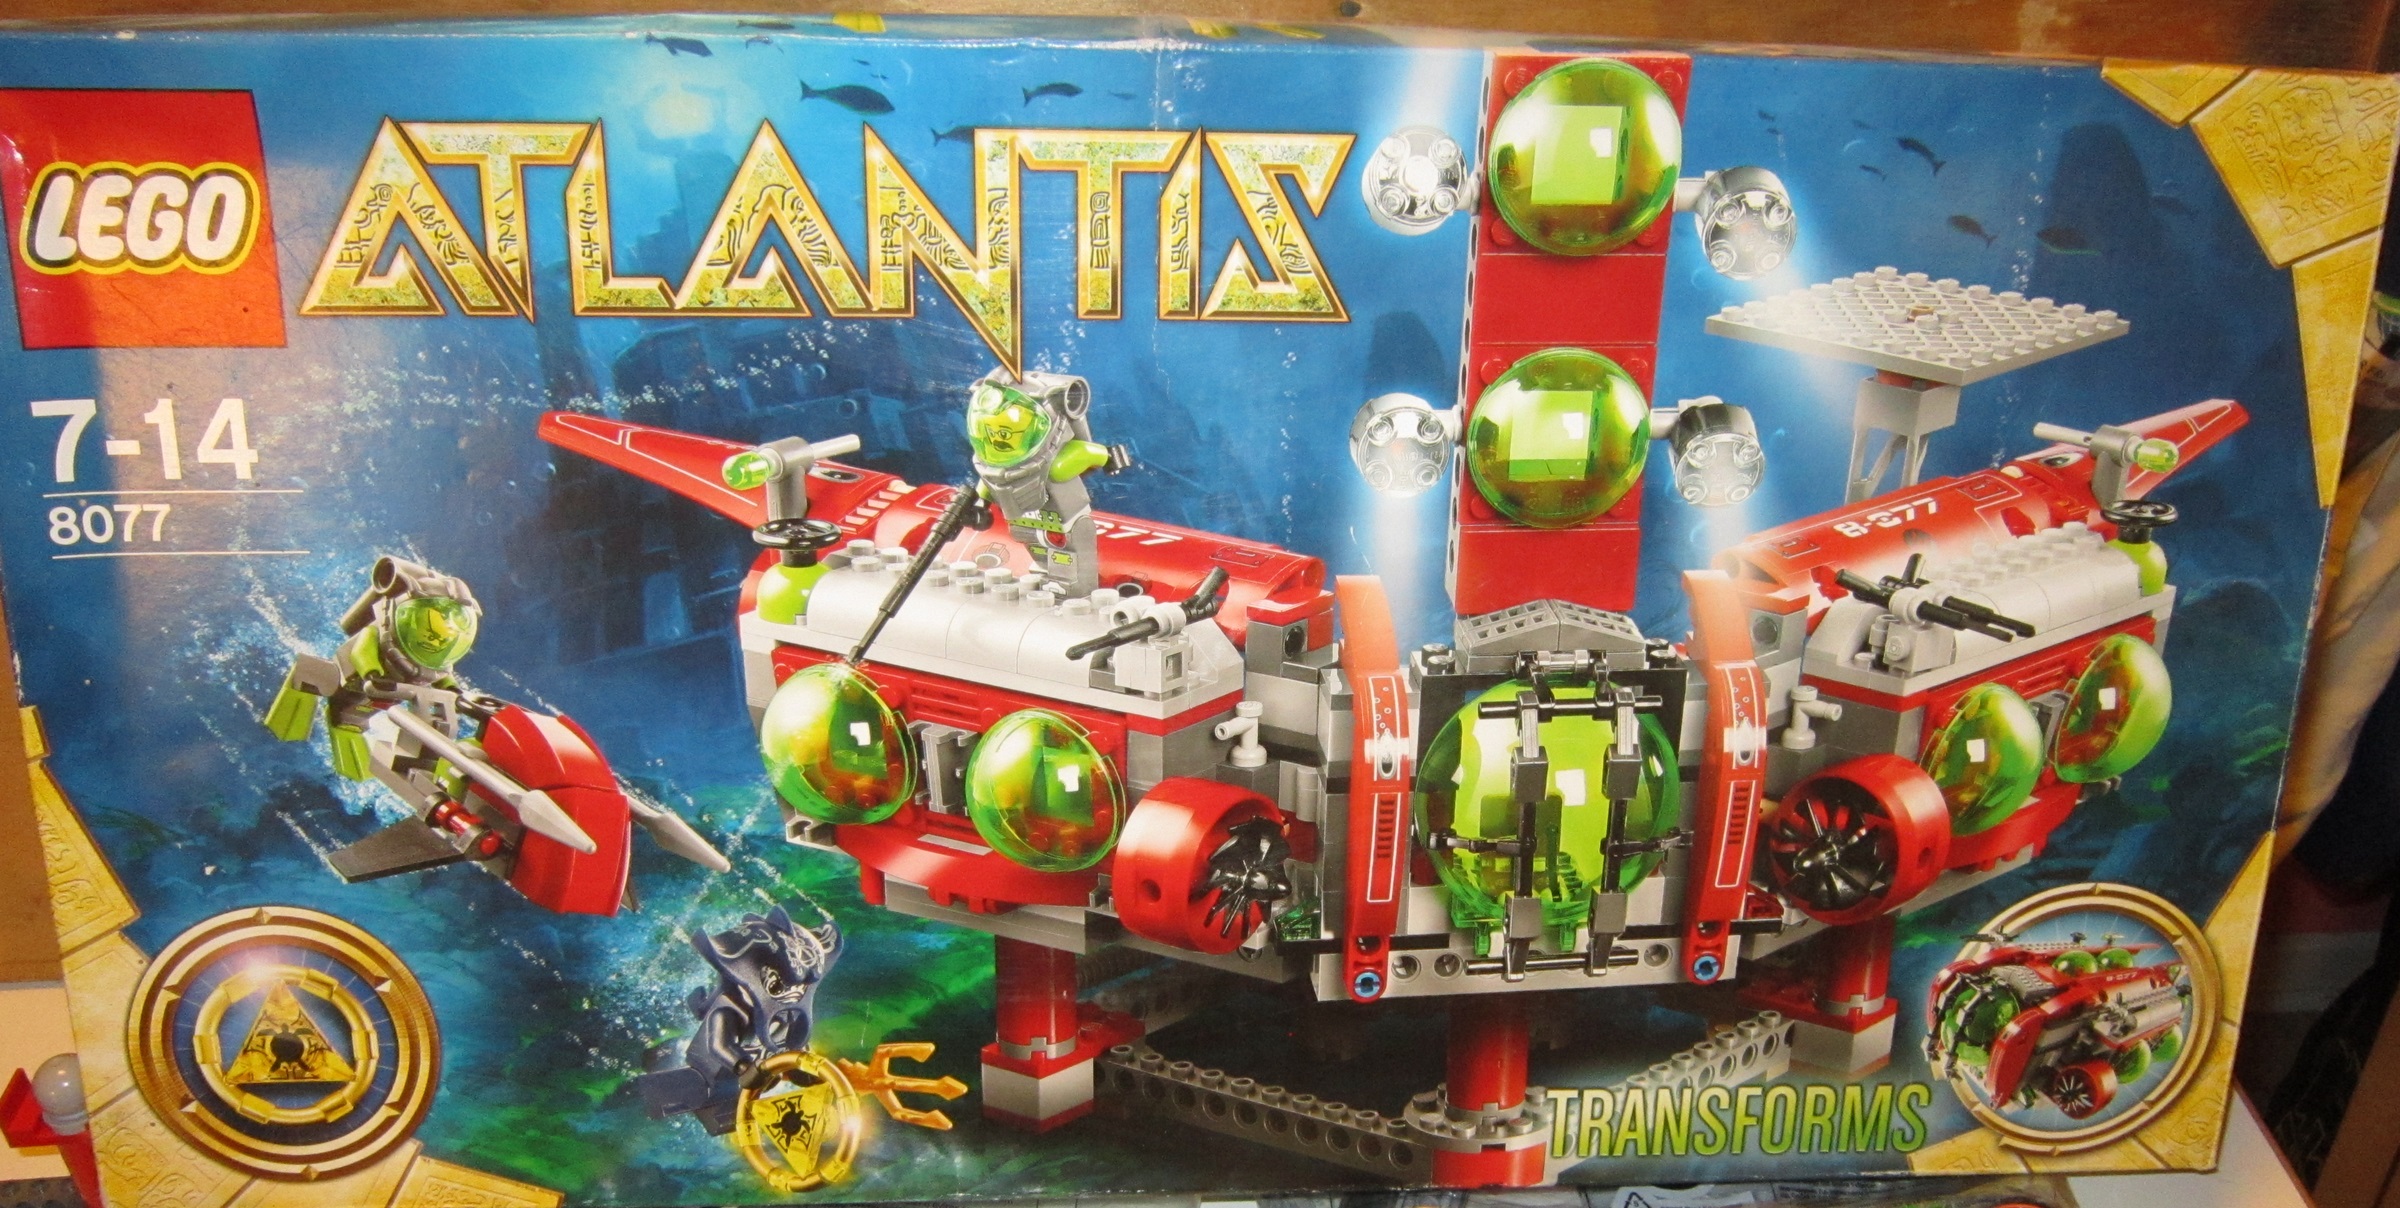 0200 Lego Atlantis 8077